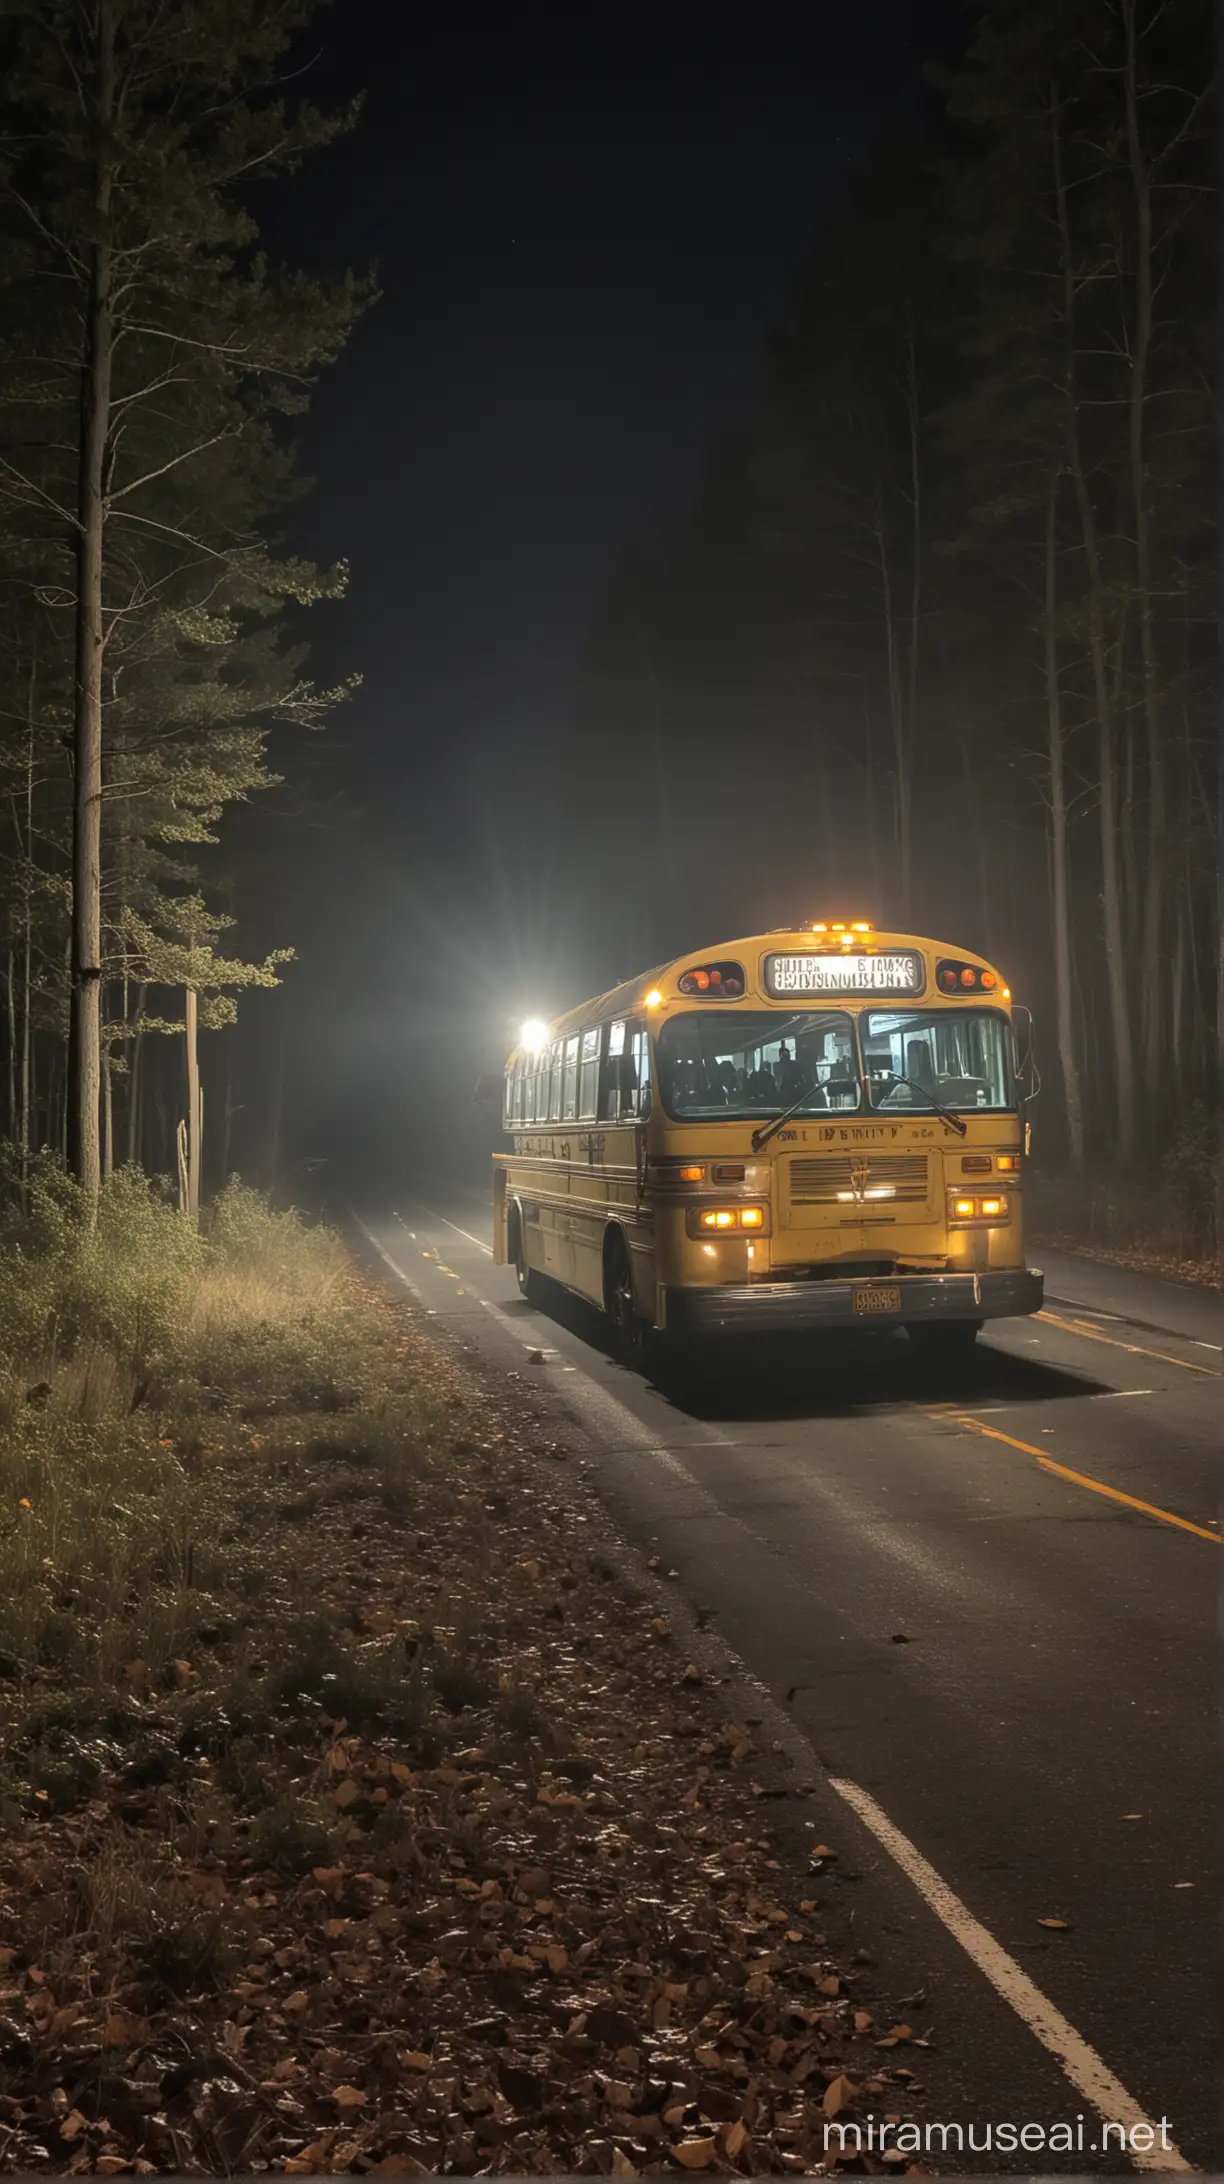 Broken Down Pilgrim Bus Near Spooky Forest at Night